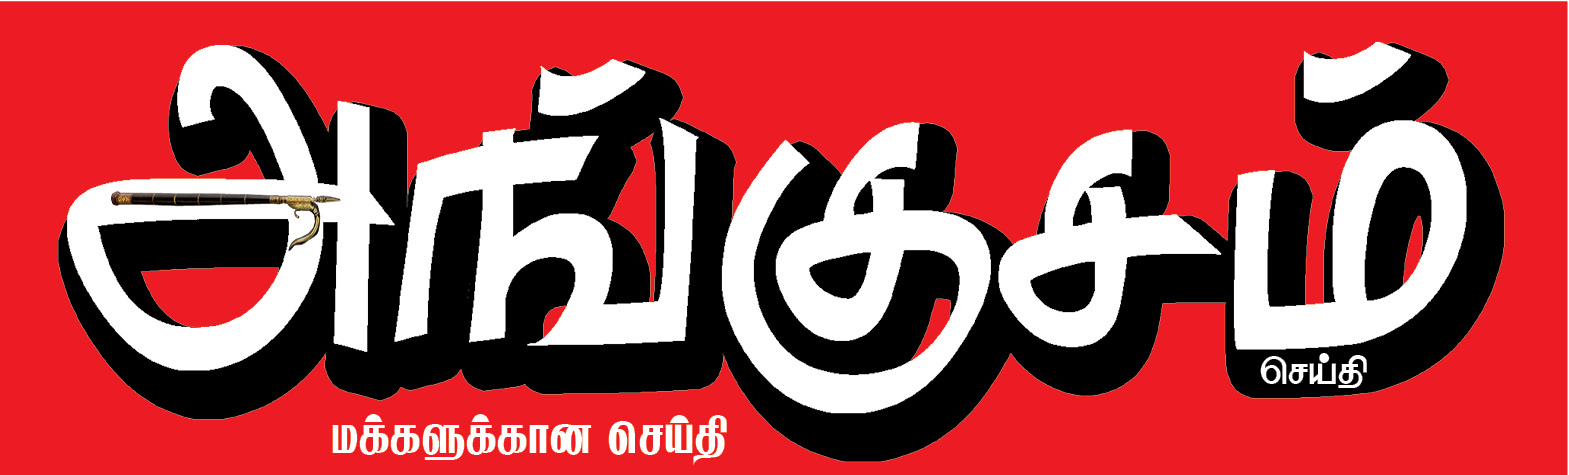 Angusam News - Online News Portal about  Tamilnadu